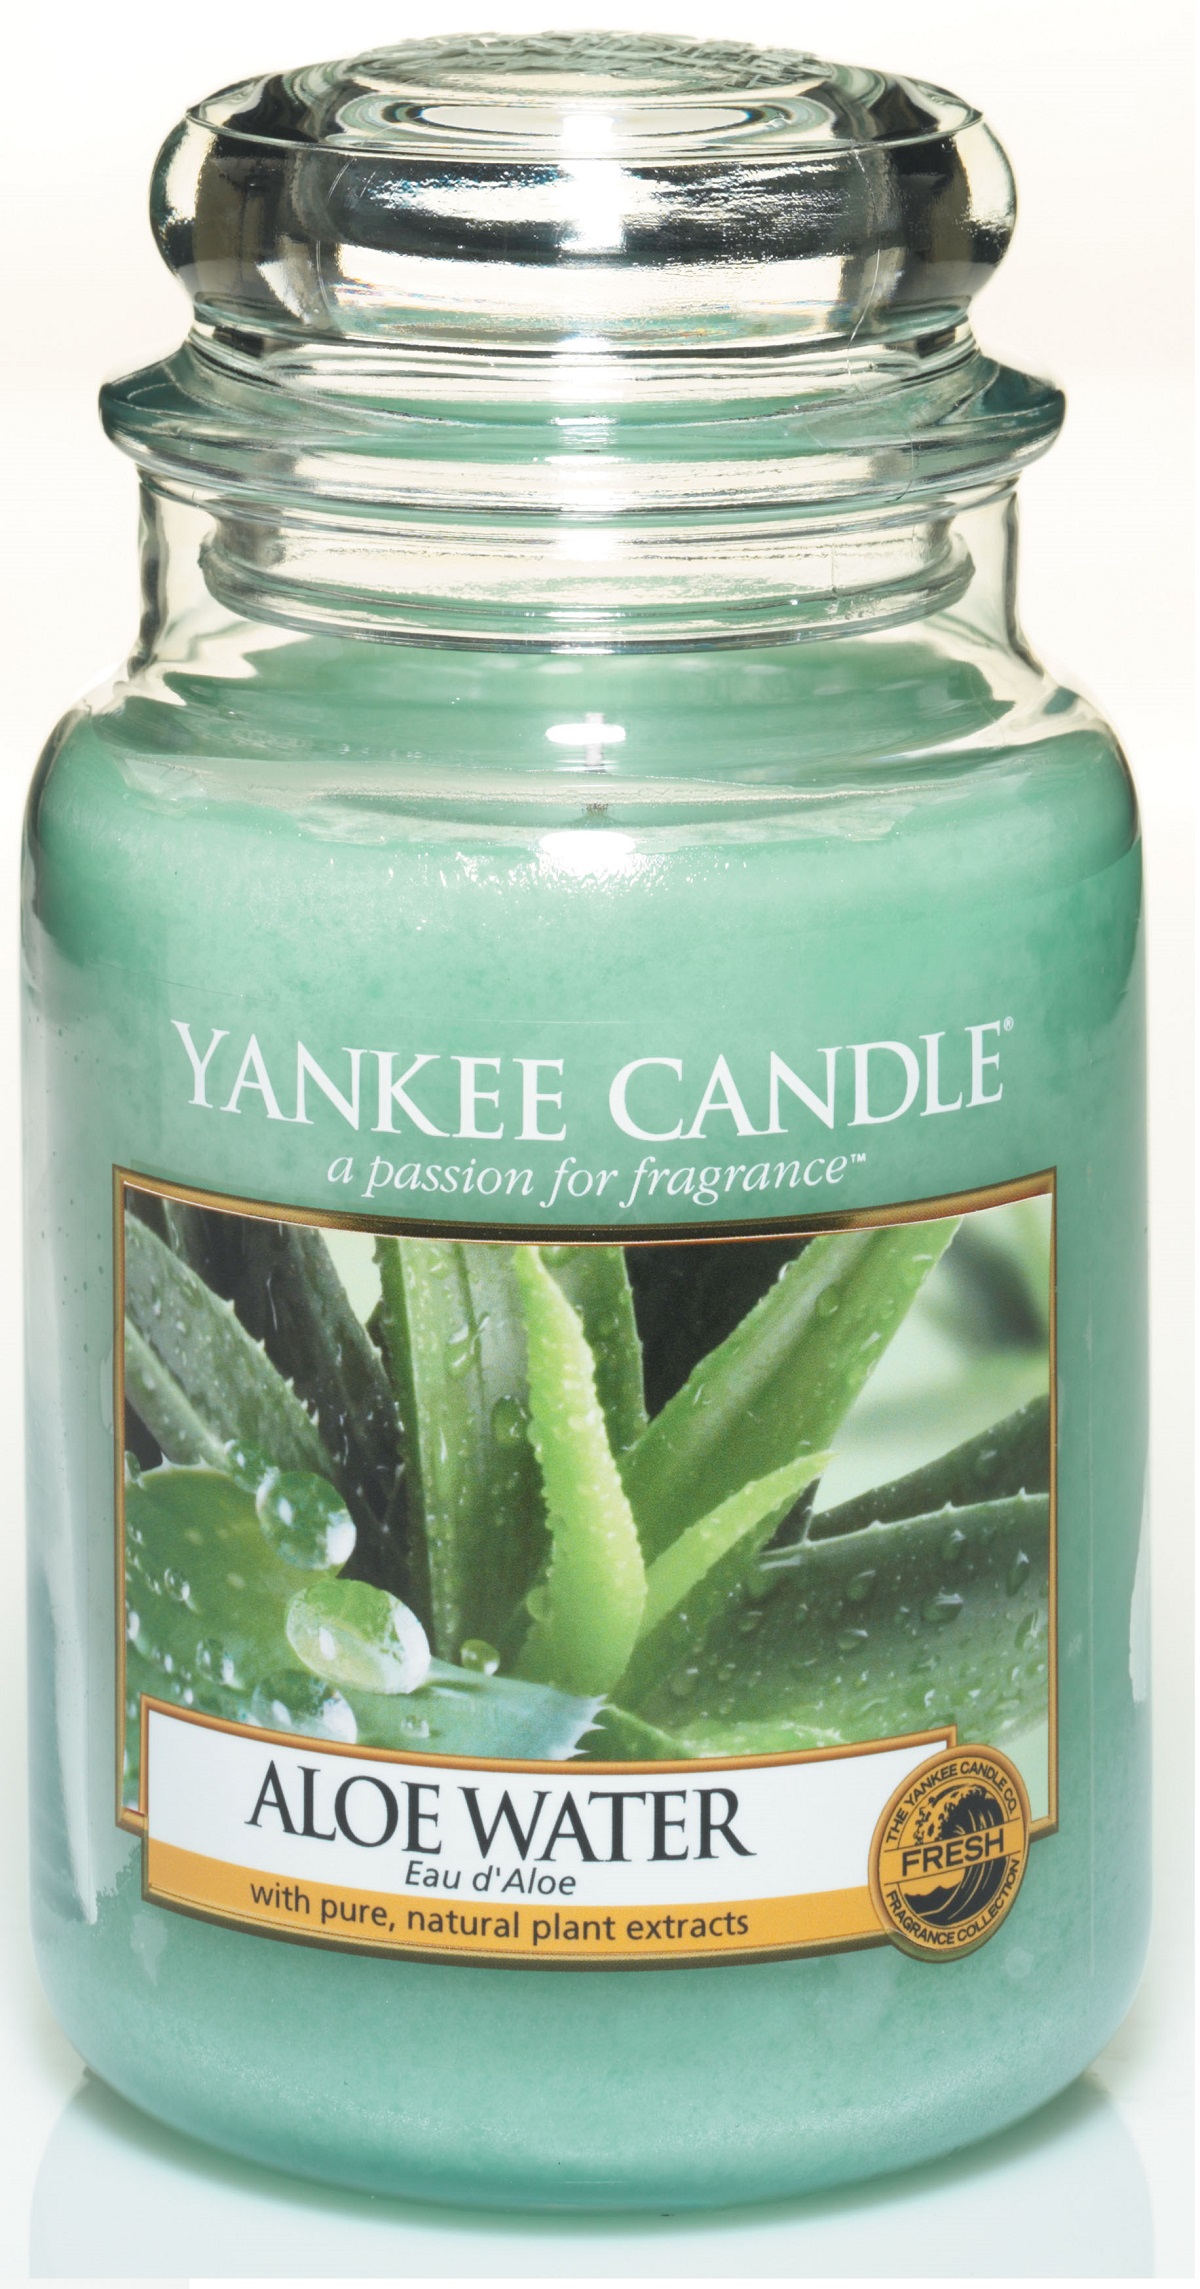 Yankee Candle Aloe Water Large Jar